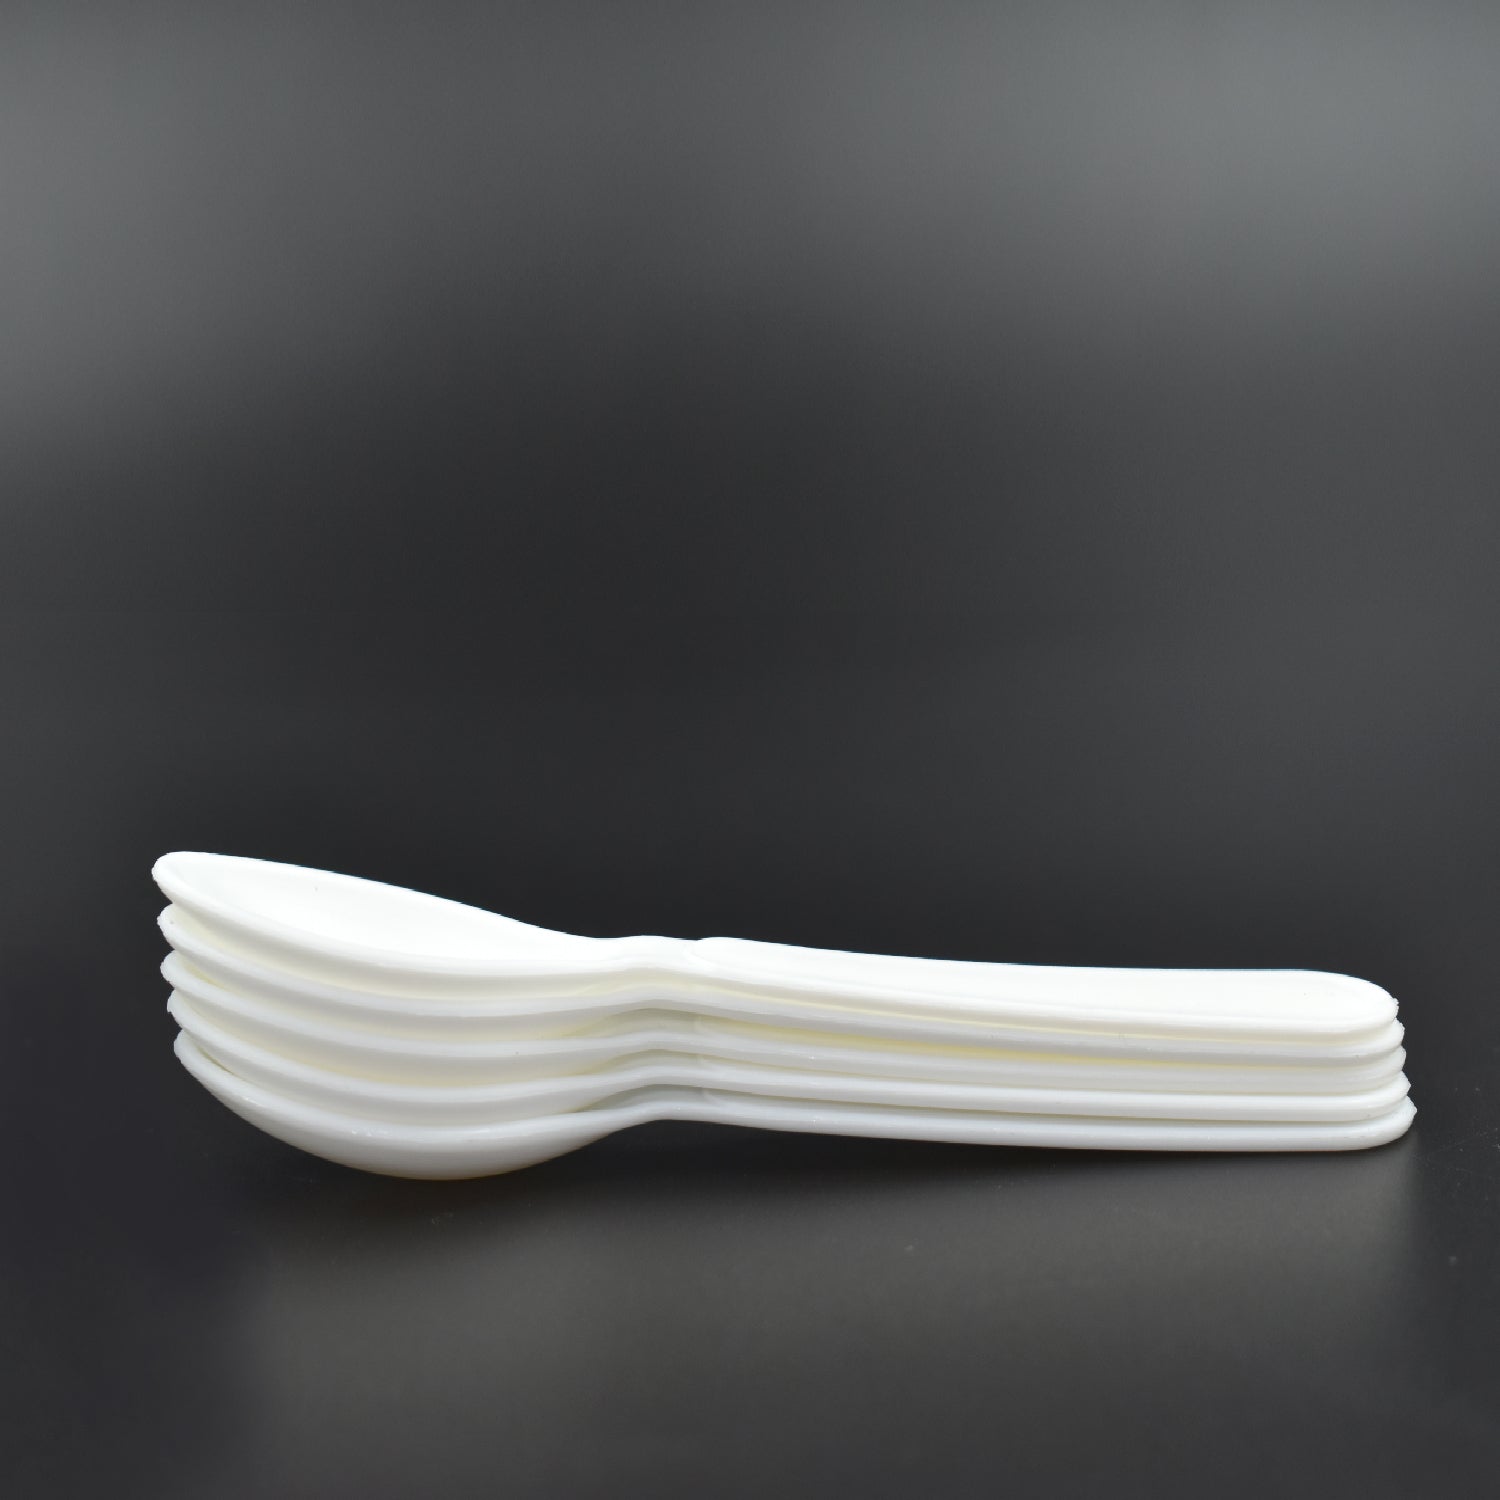 2422 Dinnerware Cutlery Premium Plastic Spoon And Fork Set - 10 pcs 